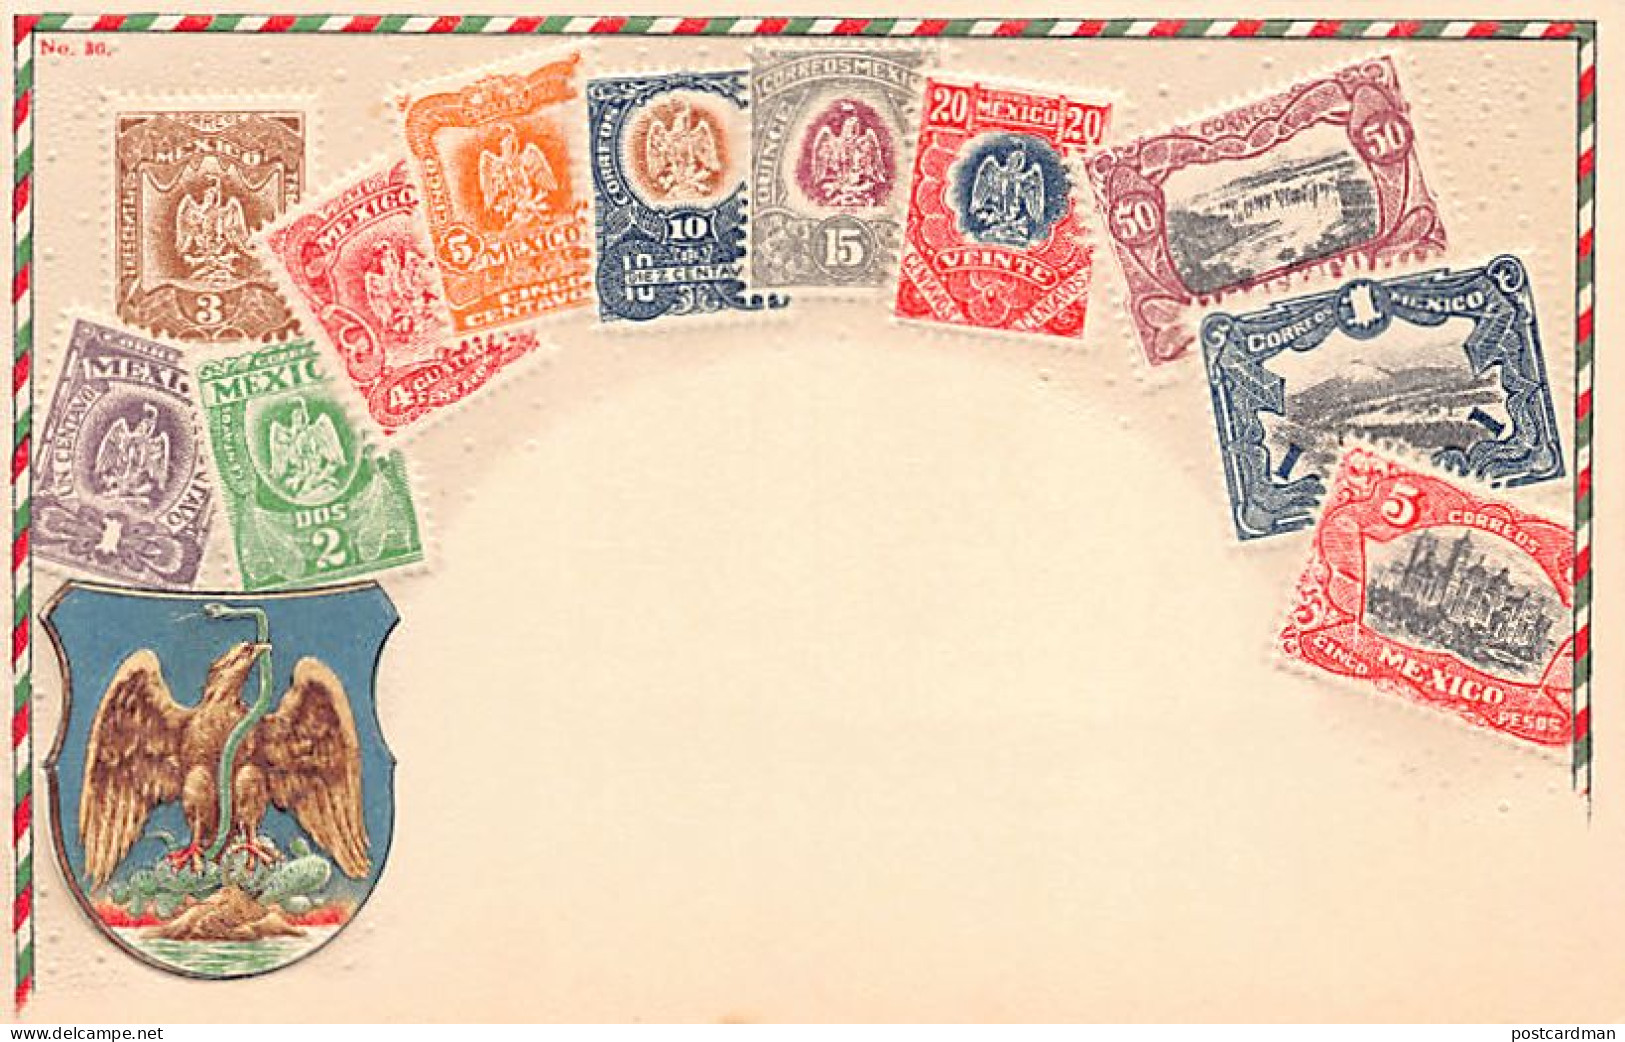 México - Philatelic Postcard - Postal Filatélica - Ed. Desconocido  - Mexiko